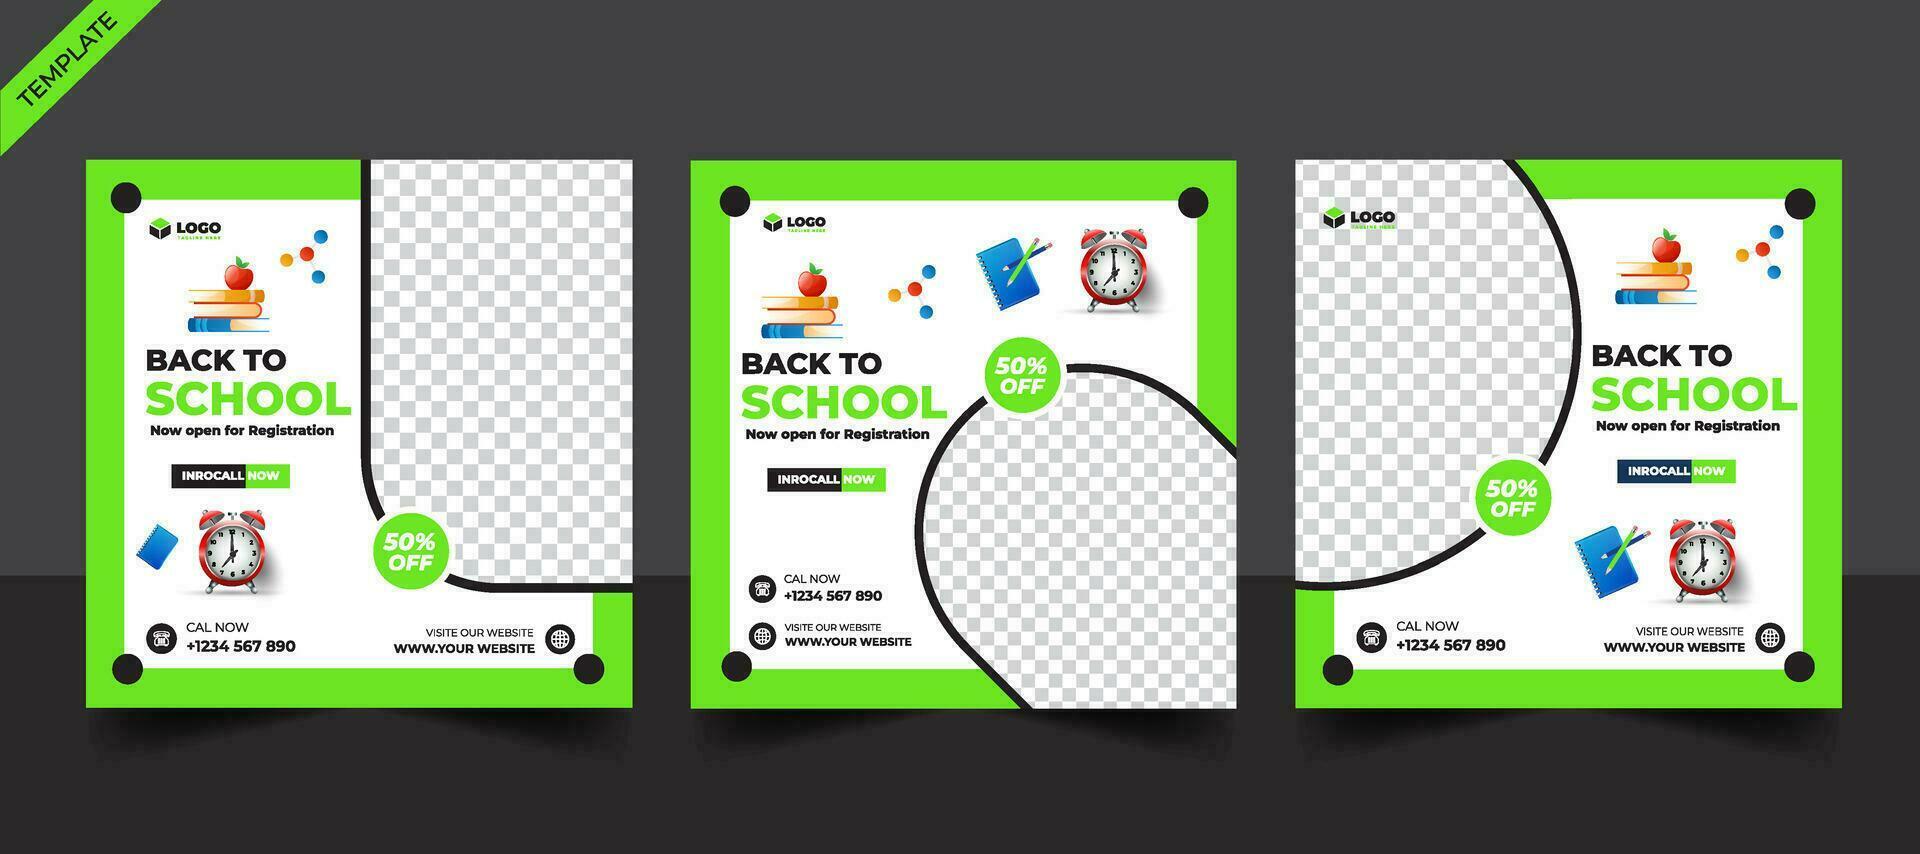 School admission social media post banner, educational social media post square flyer back to school web banner design template vector